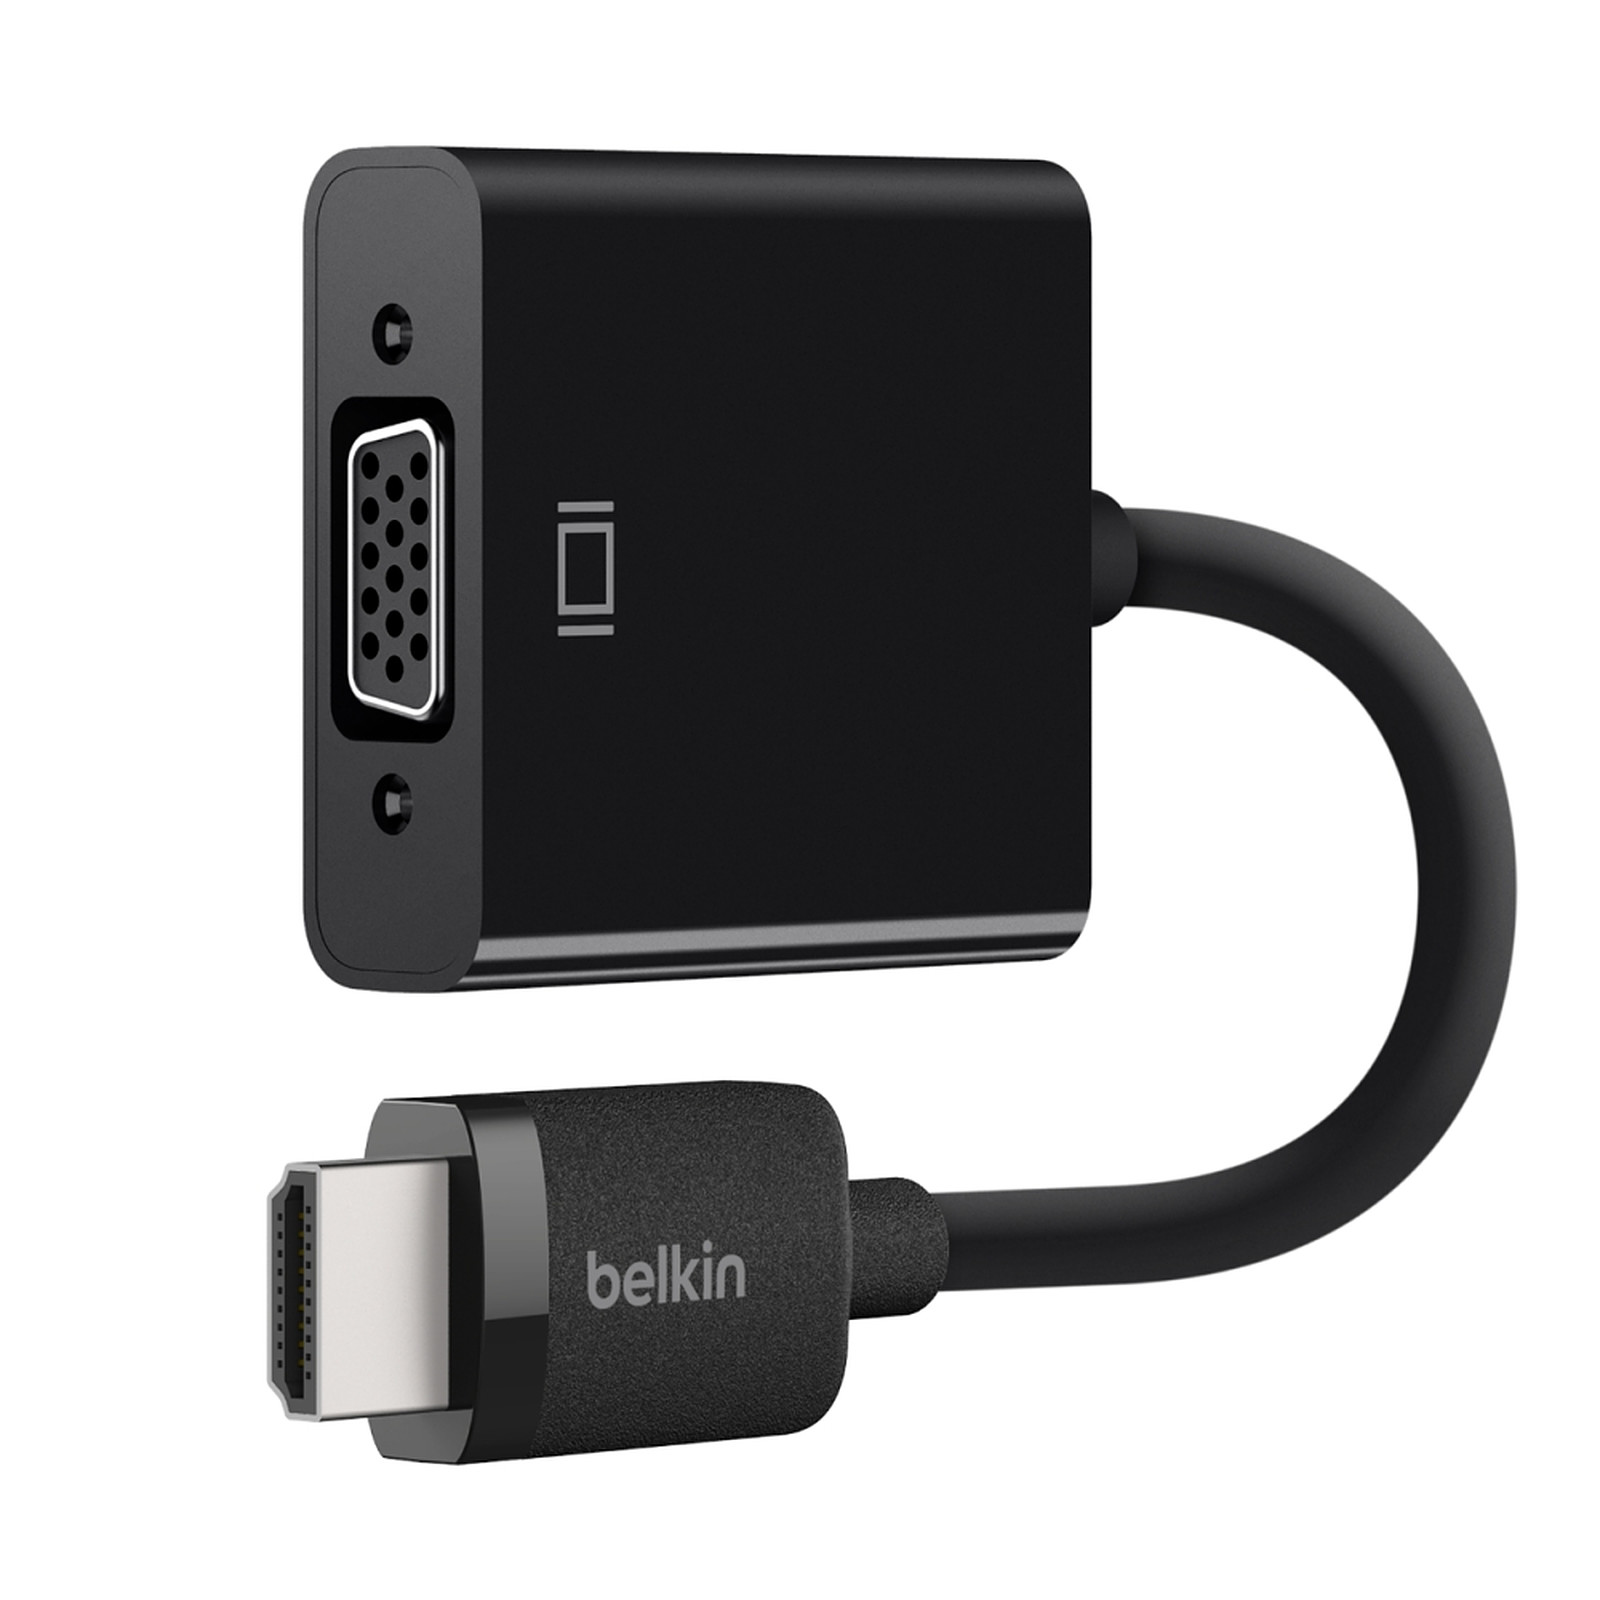 Belkin adaptateur HDMI vers VGA - HDMI Belkin